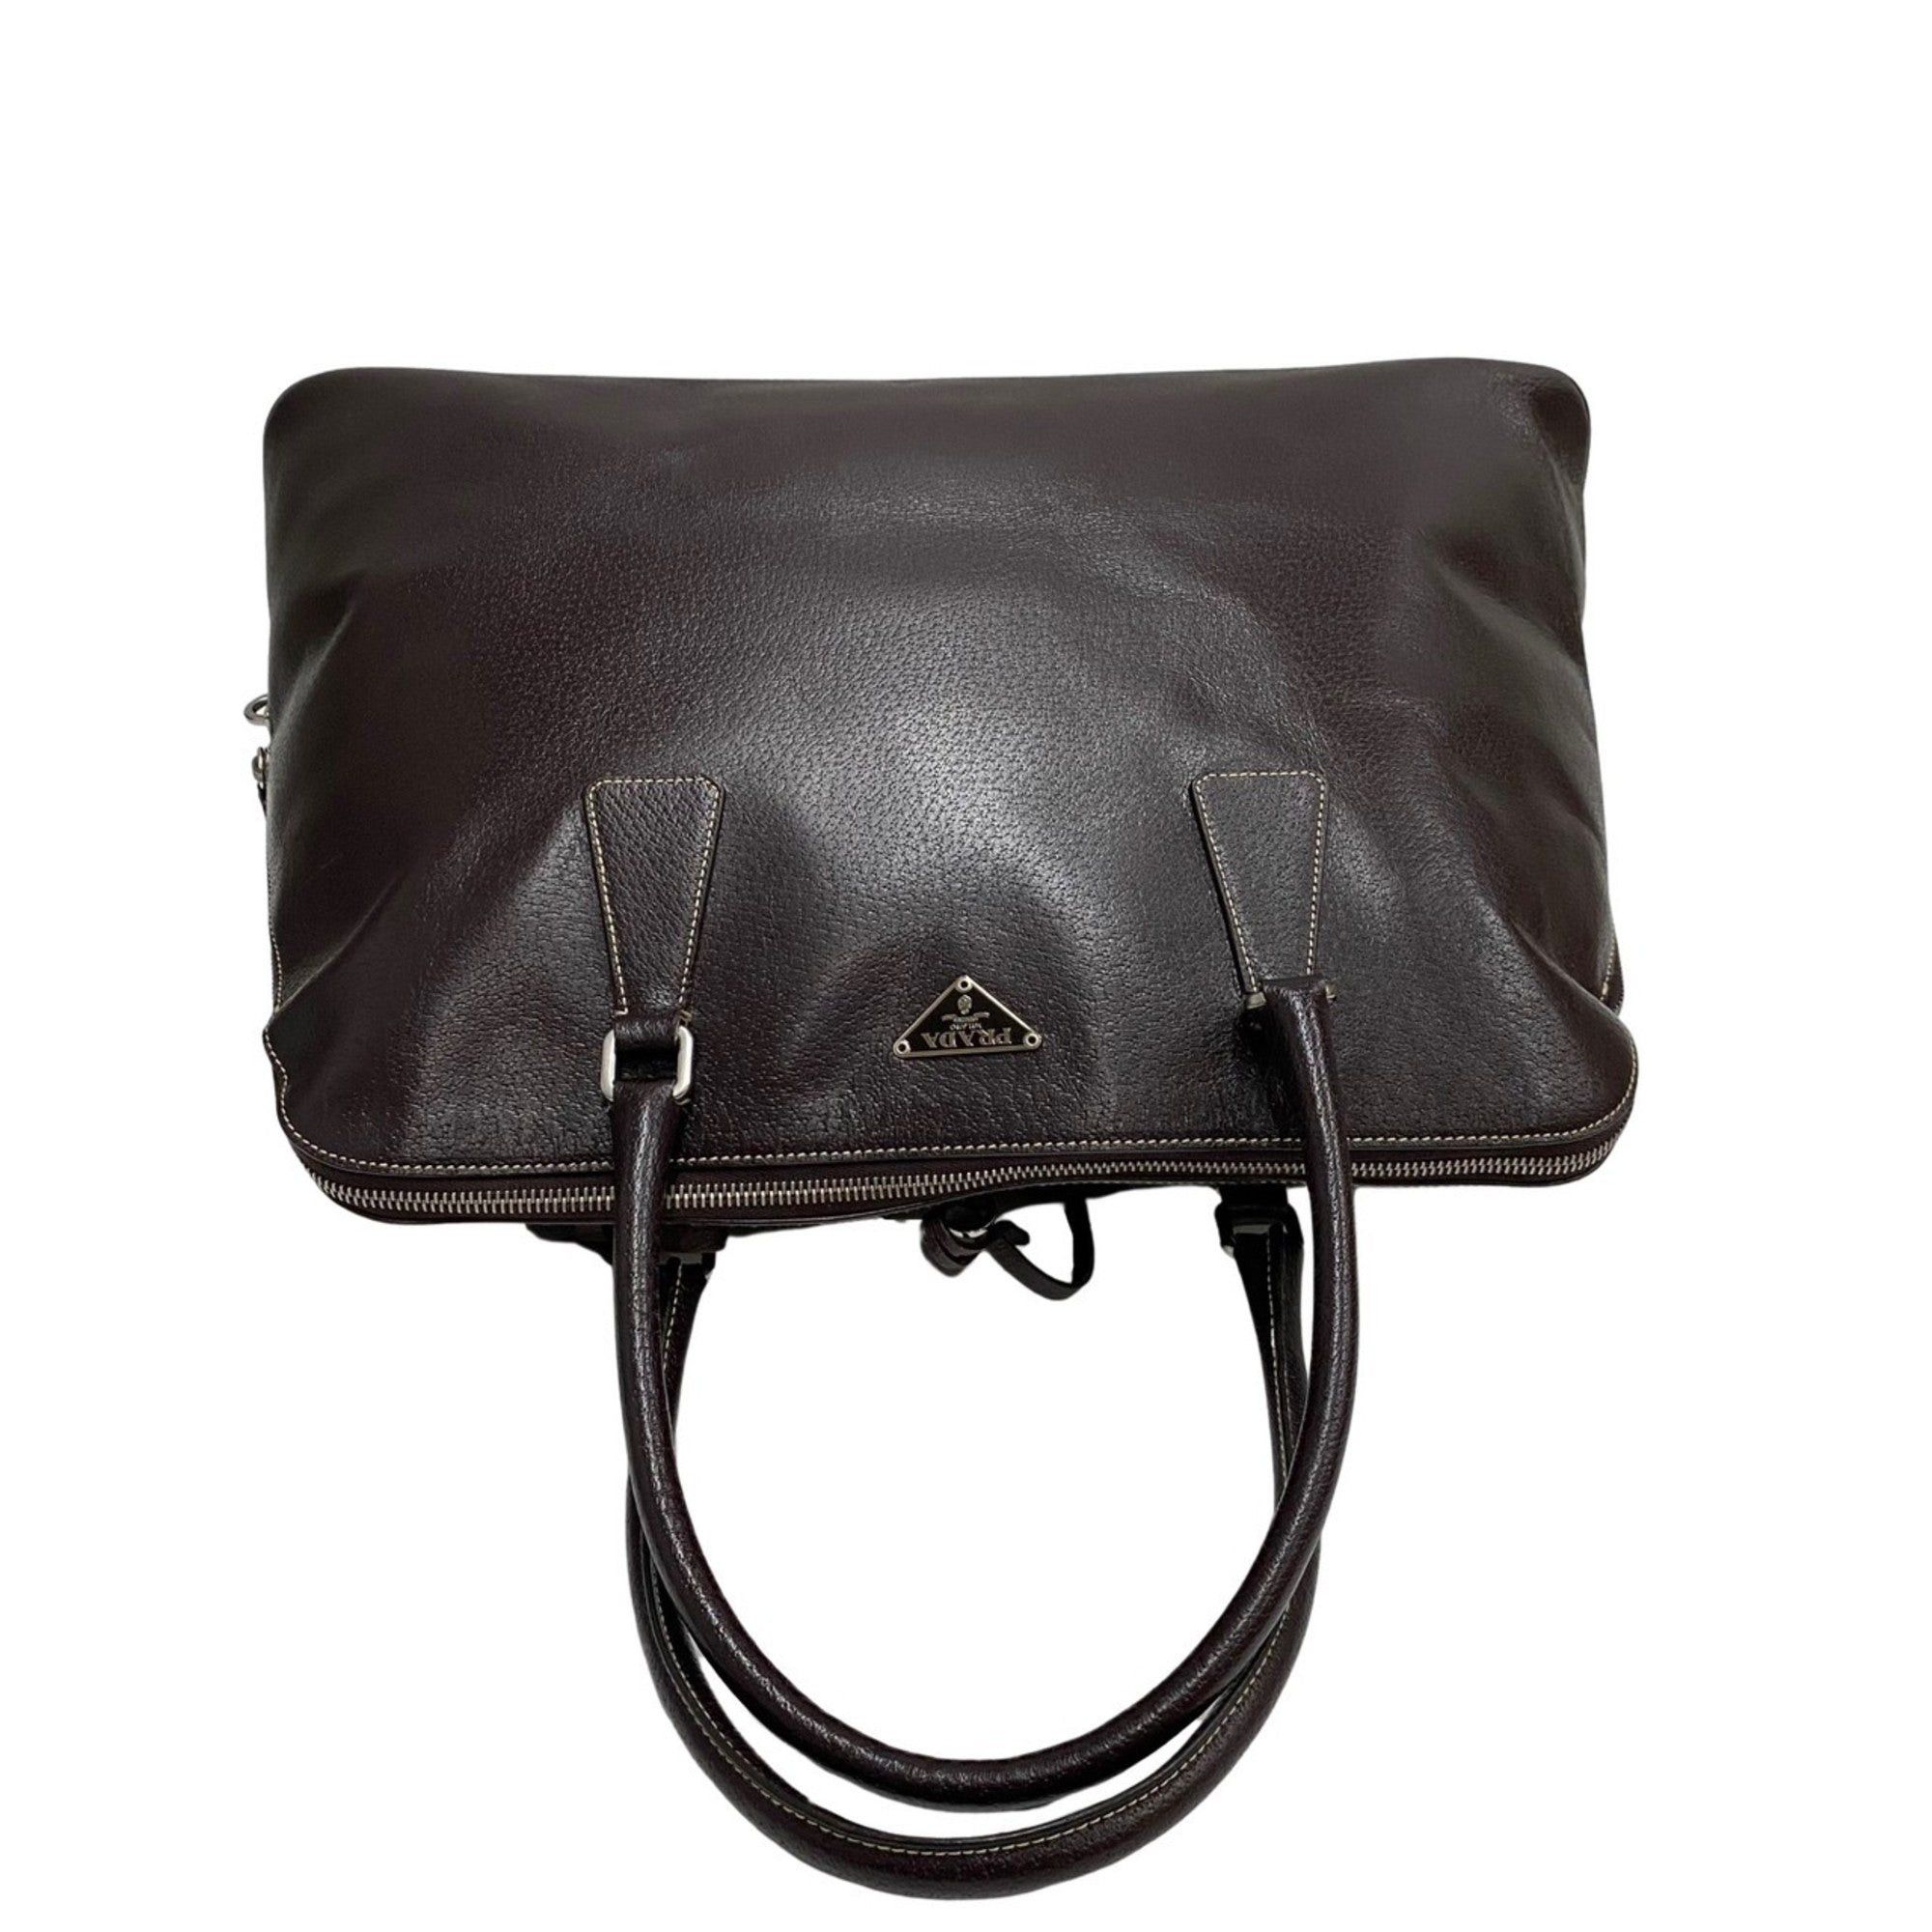 Prada PRADA triangle logo metal fittings leather genuine handbag tote bag mini Boston brown Size ONE SIZE - 8 Thumbnail